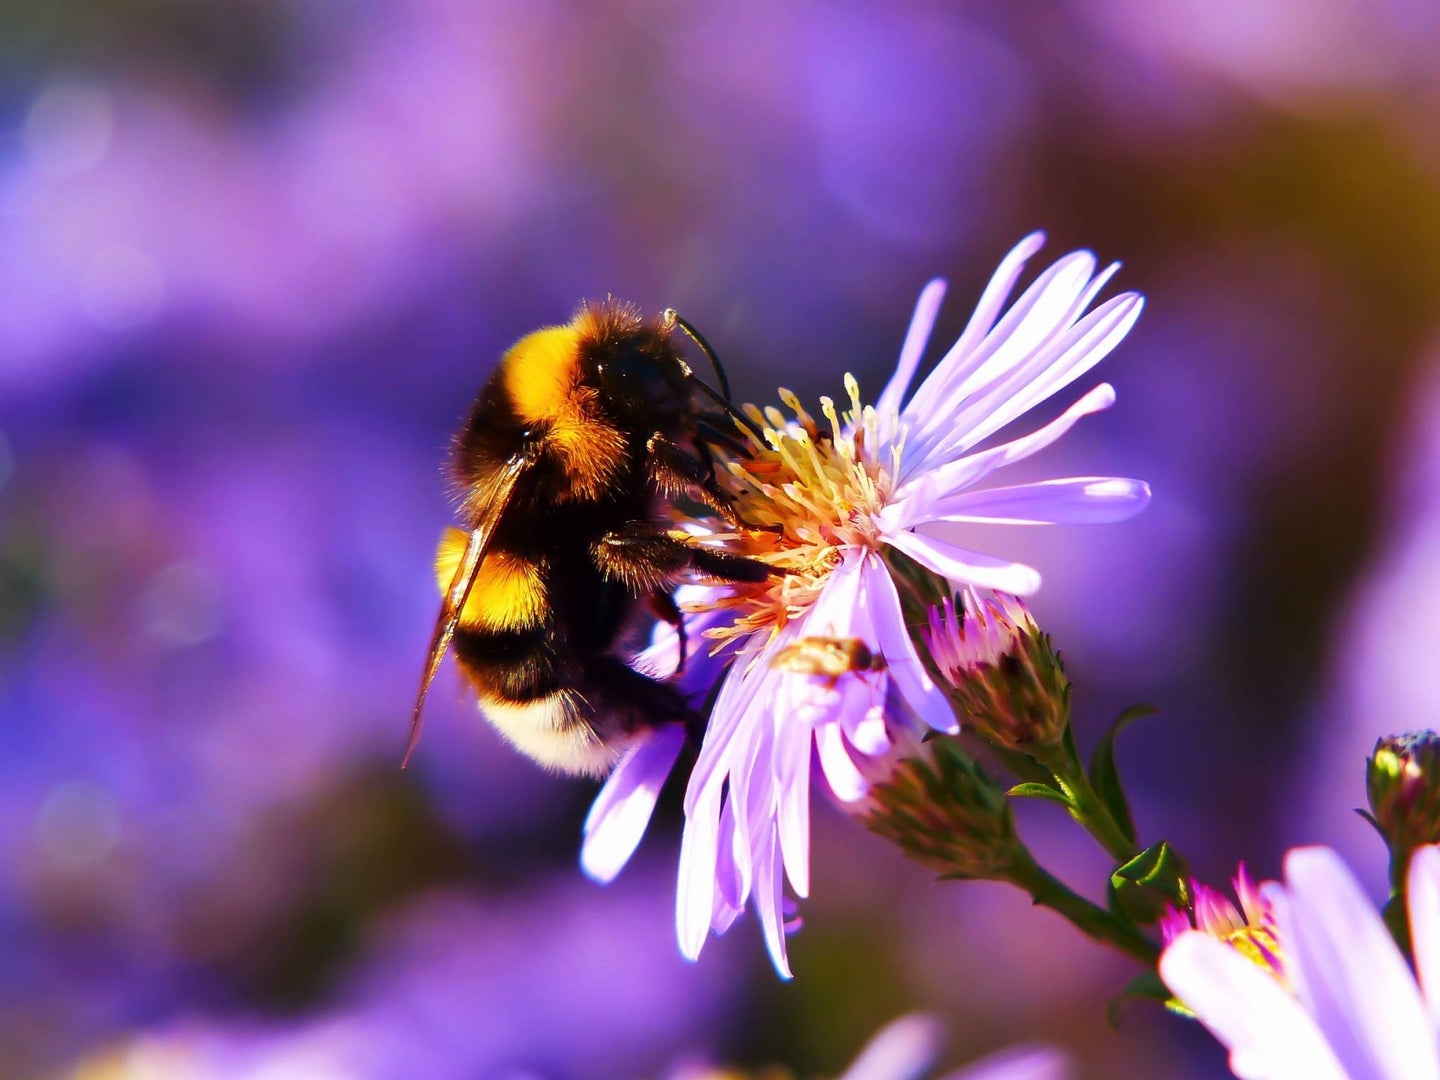 Bee-pollinating-purple-flower